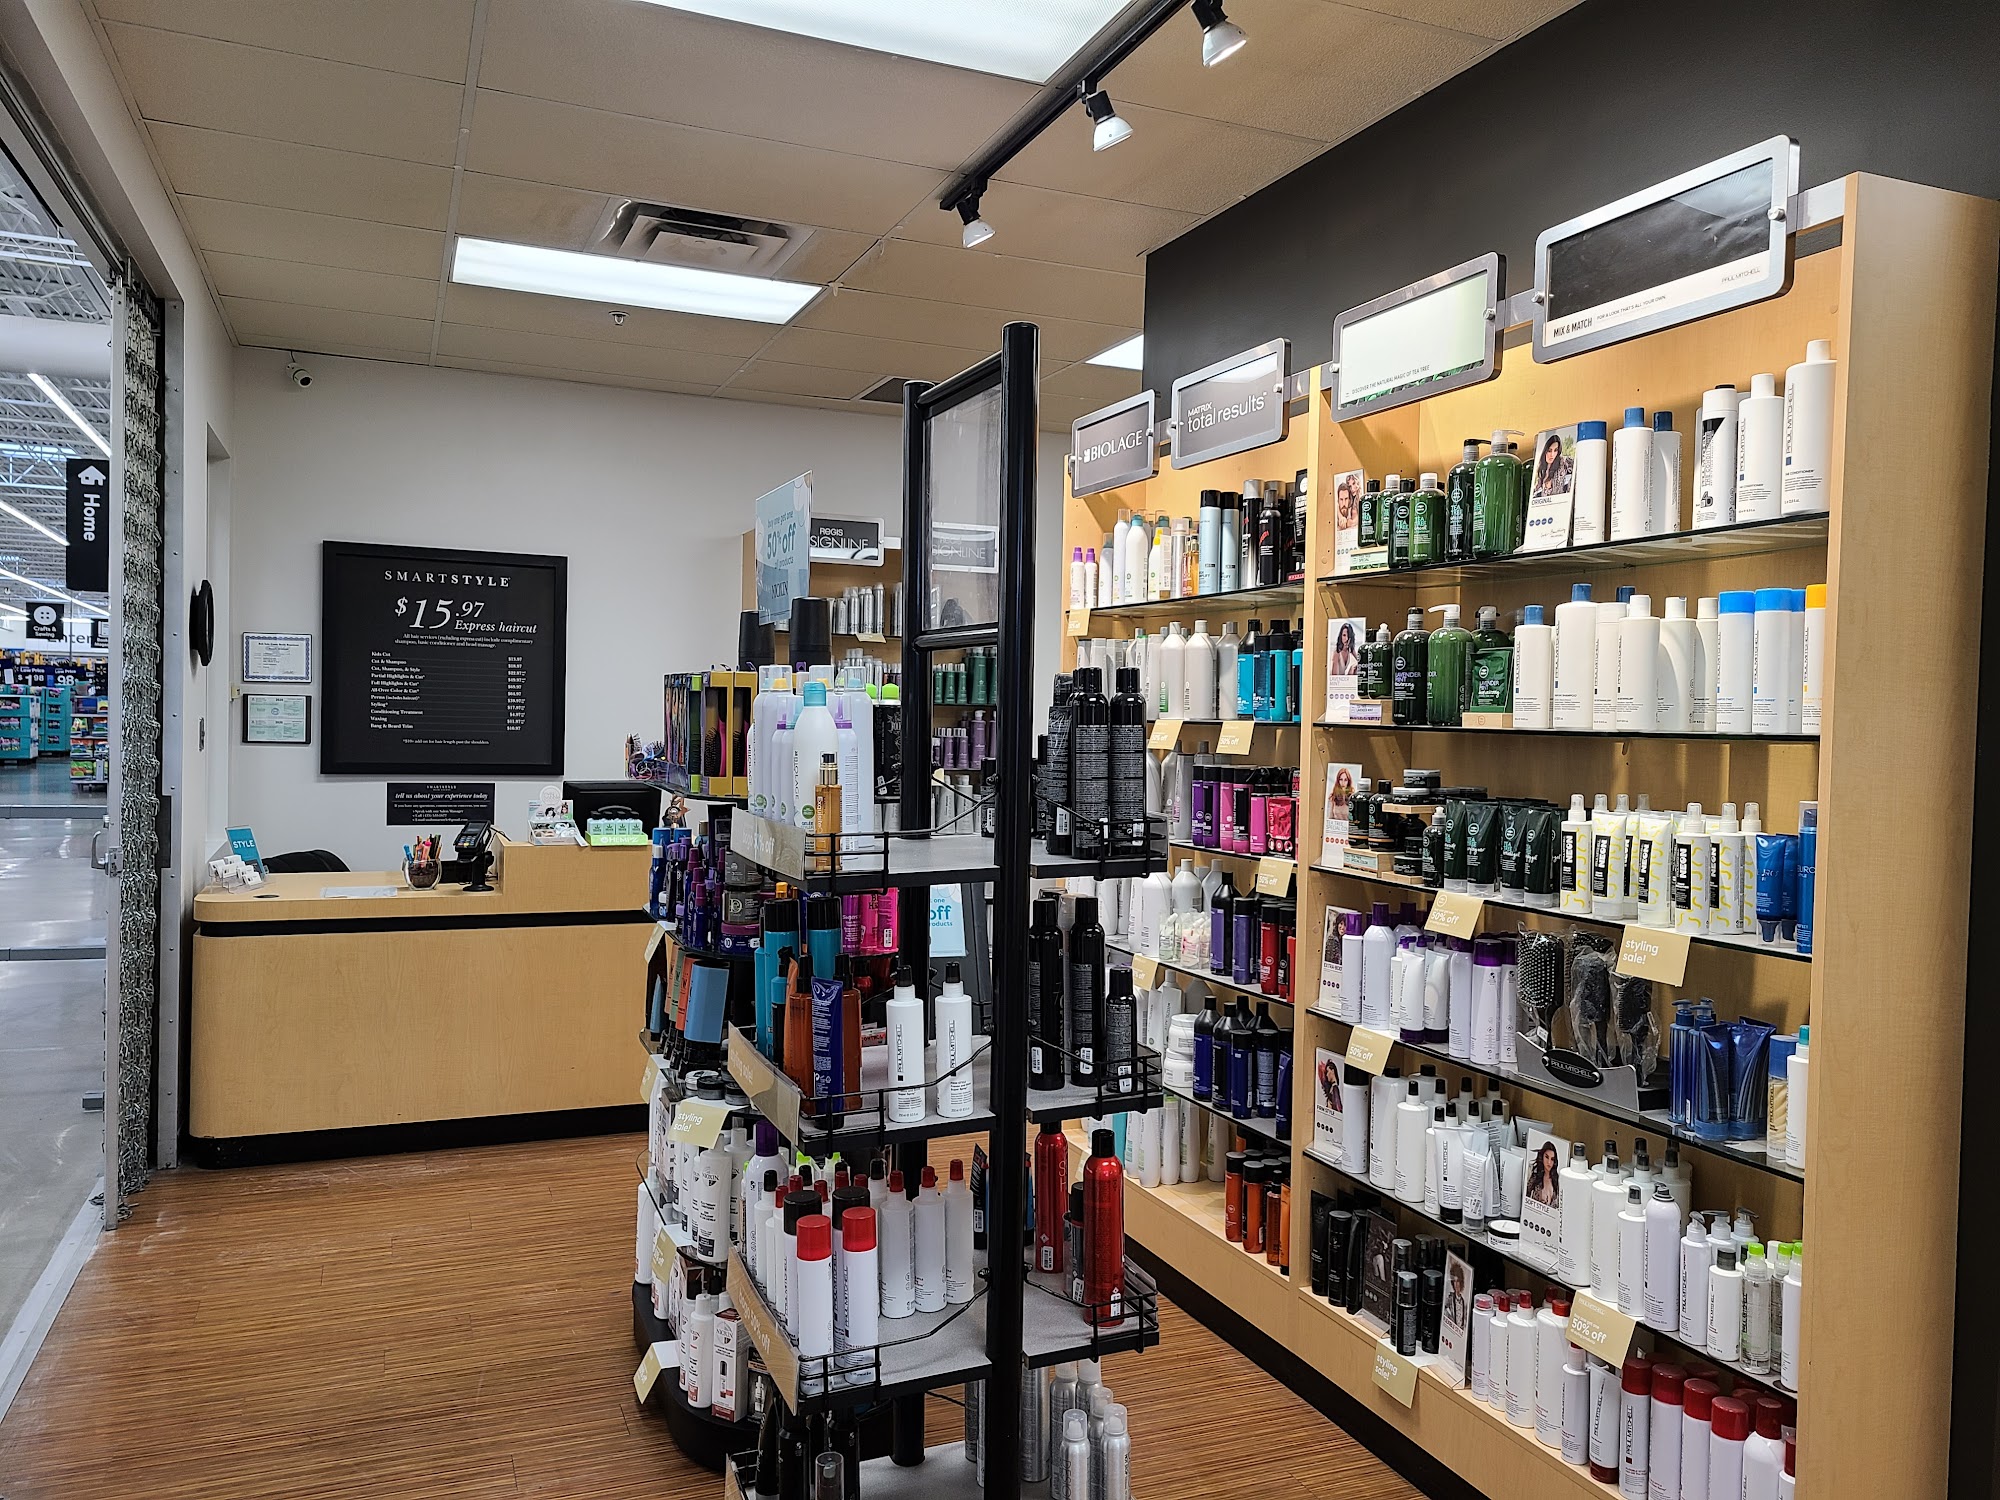 SmartStyle Hair Salon 1200 S Commerce Way Located Inside Walmart #3454, Brigham City Utah 84302